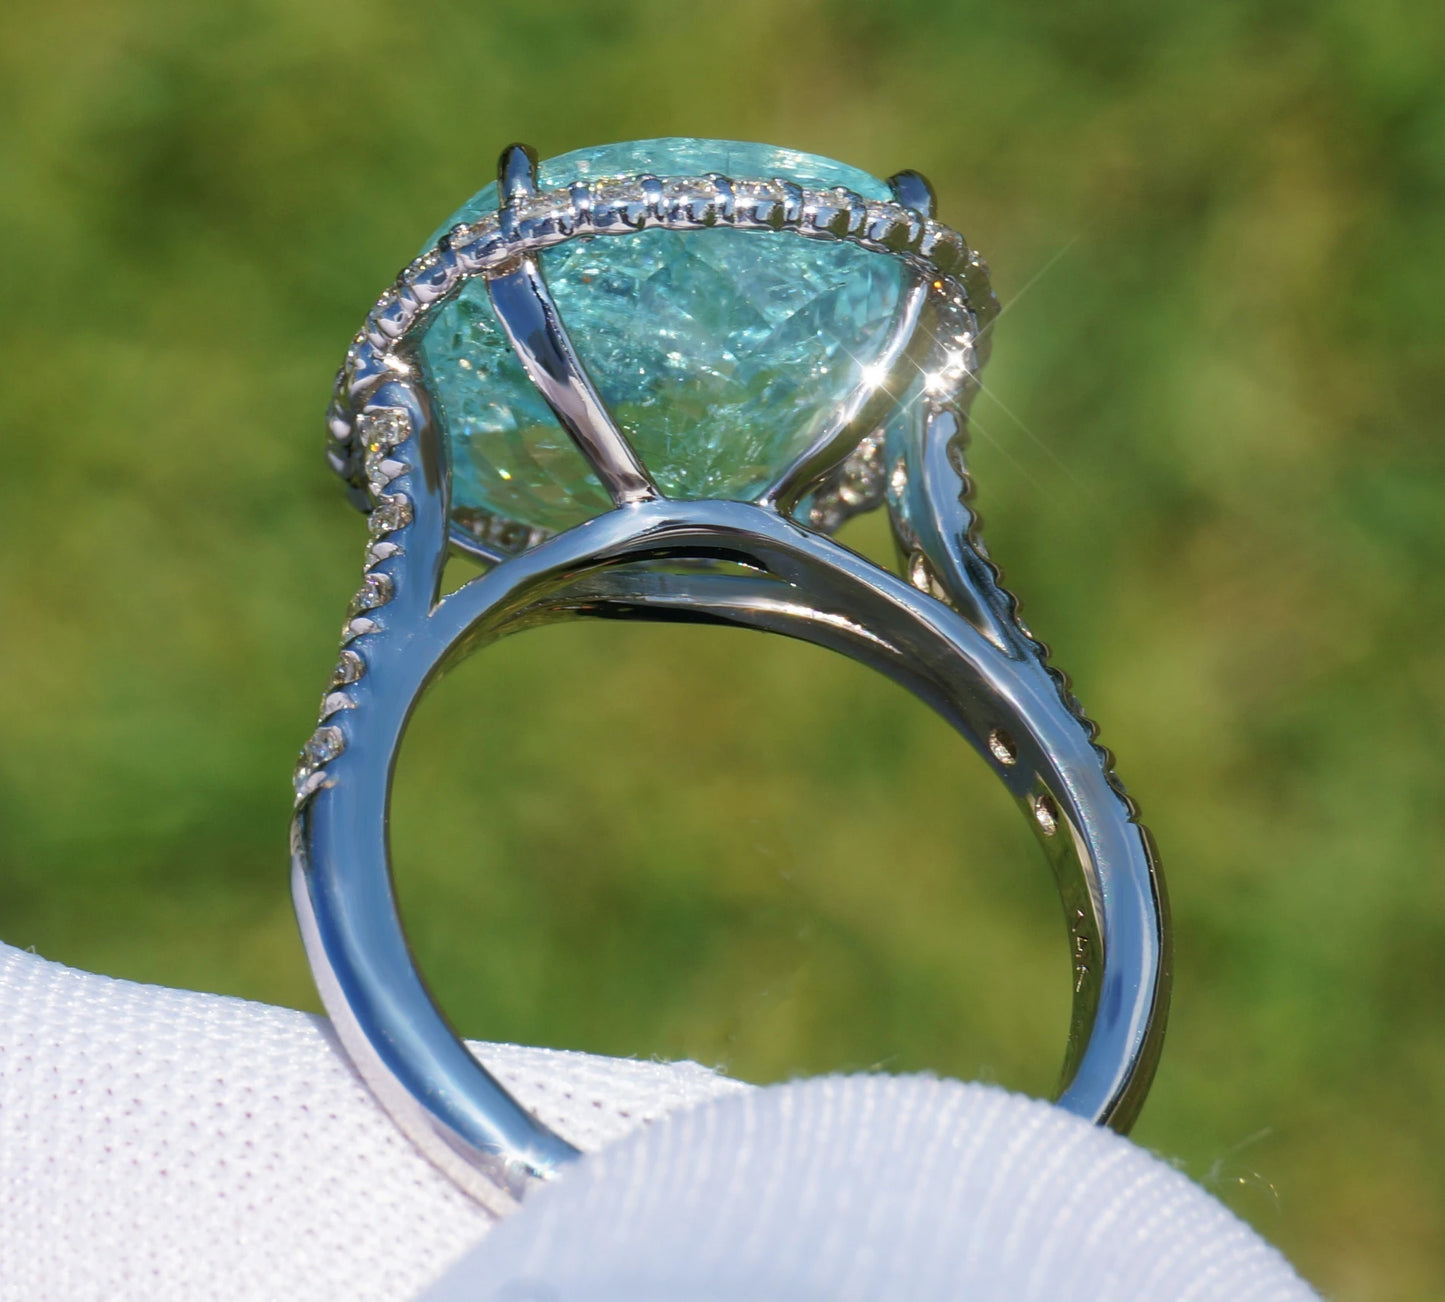 Paraiba tourmaline copper bearing ring gold 14k diamond 10.50ctw gia certified cushion blue